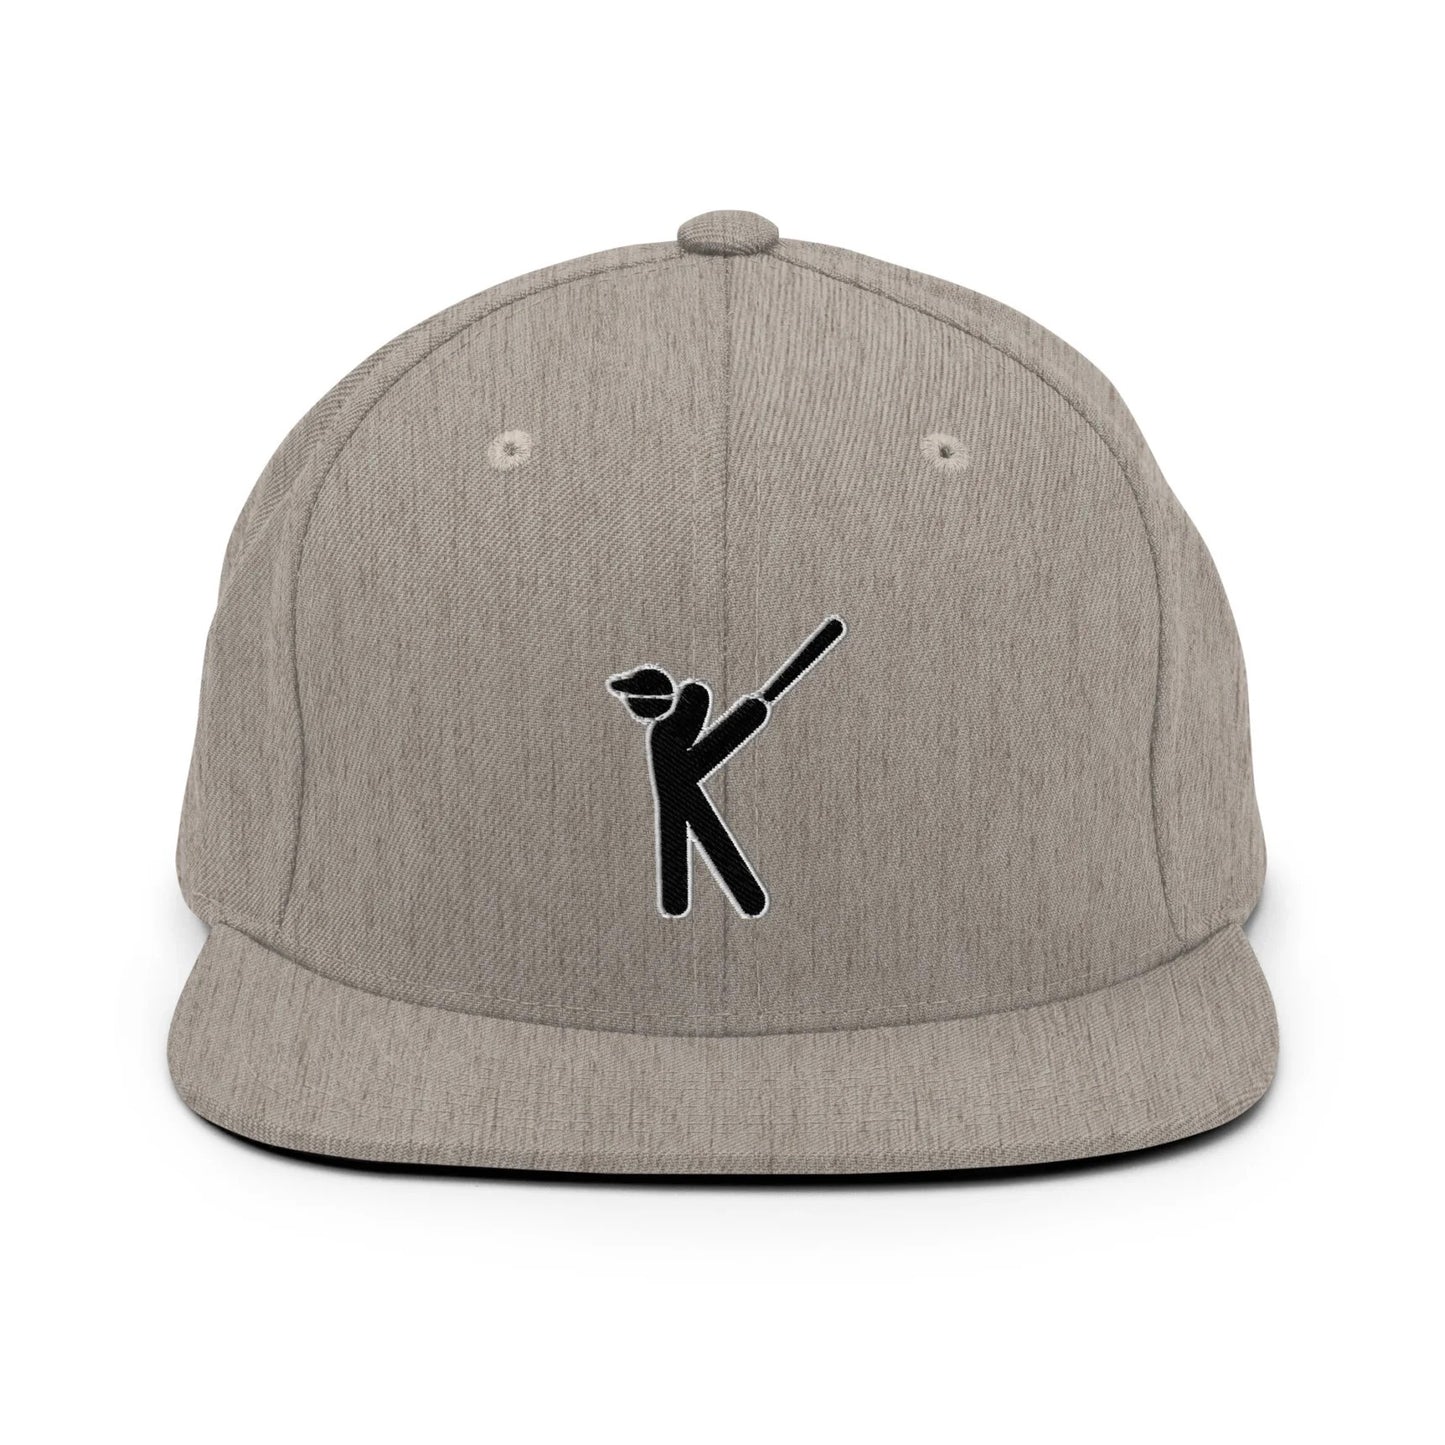 Kasabe ShowZone snapback hat in heather grey